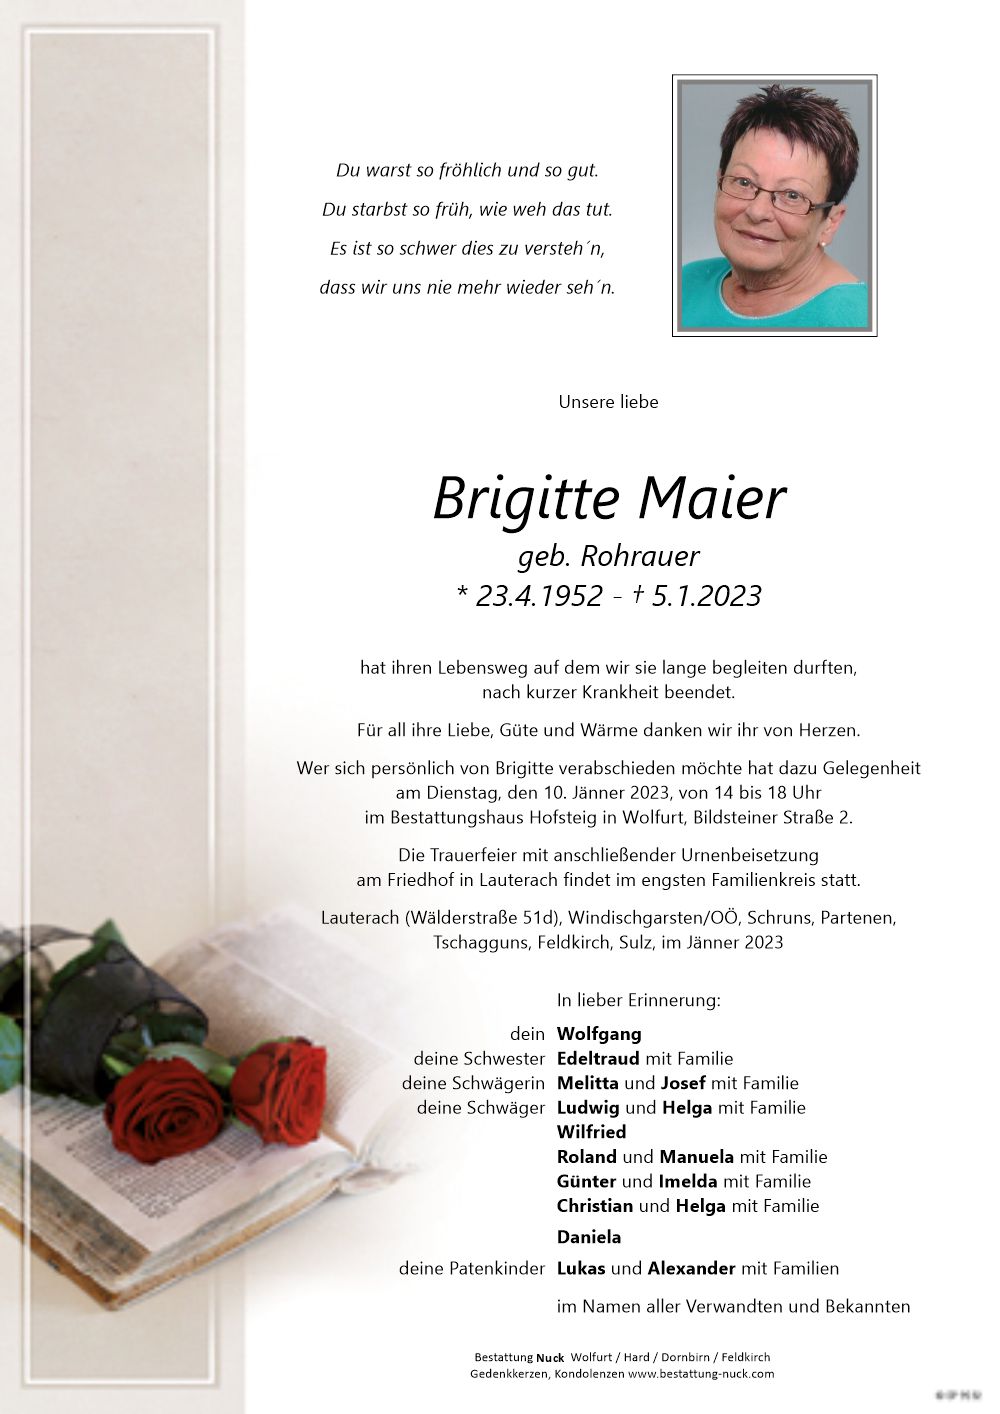 Brigitte Maier Bestattung Nuck